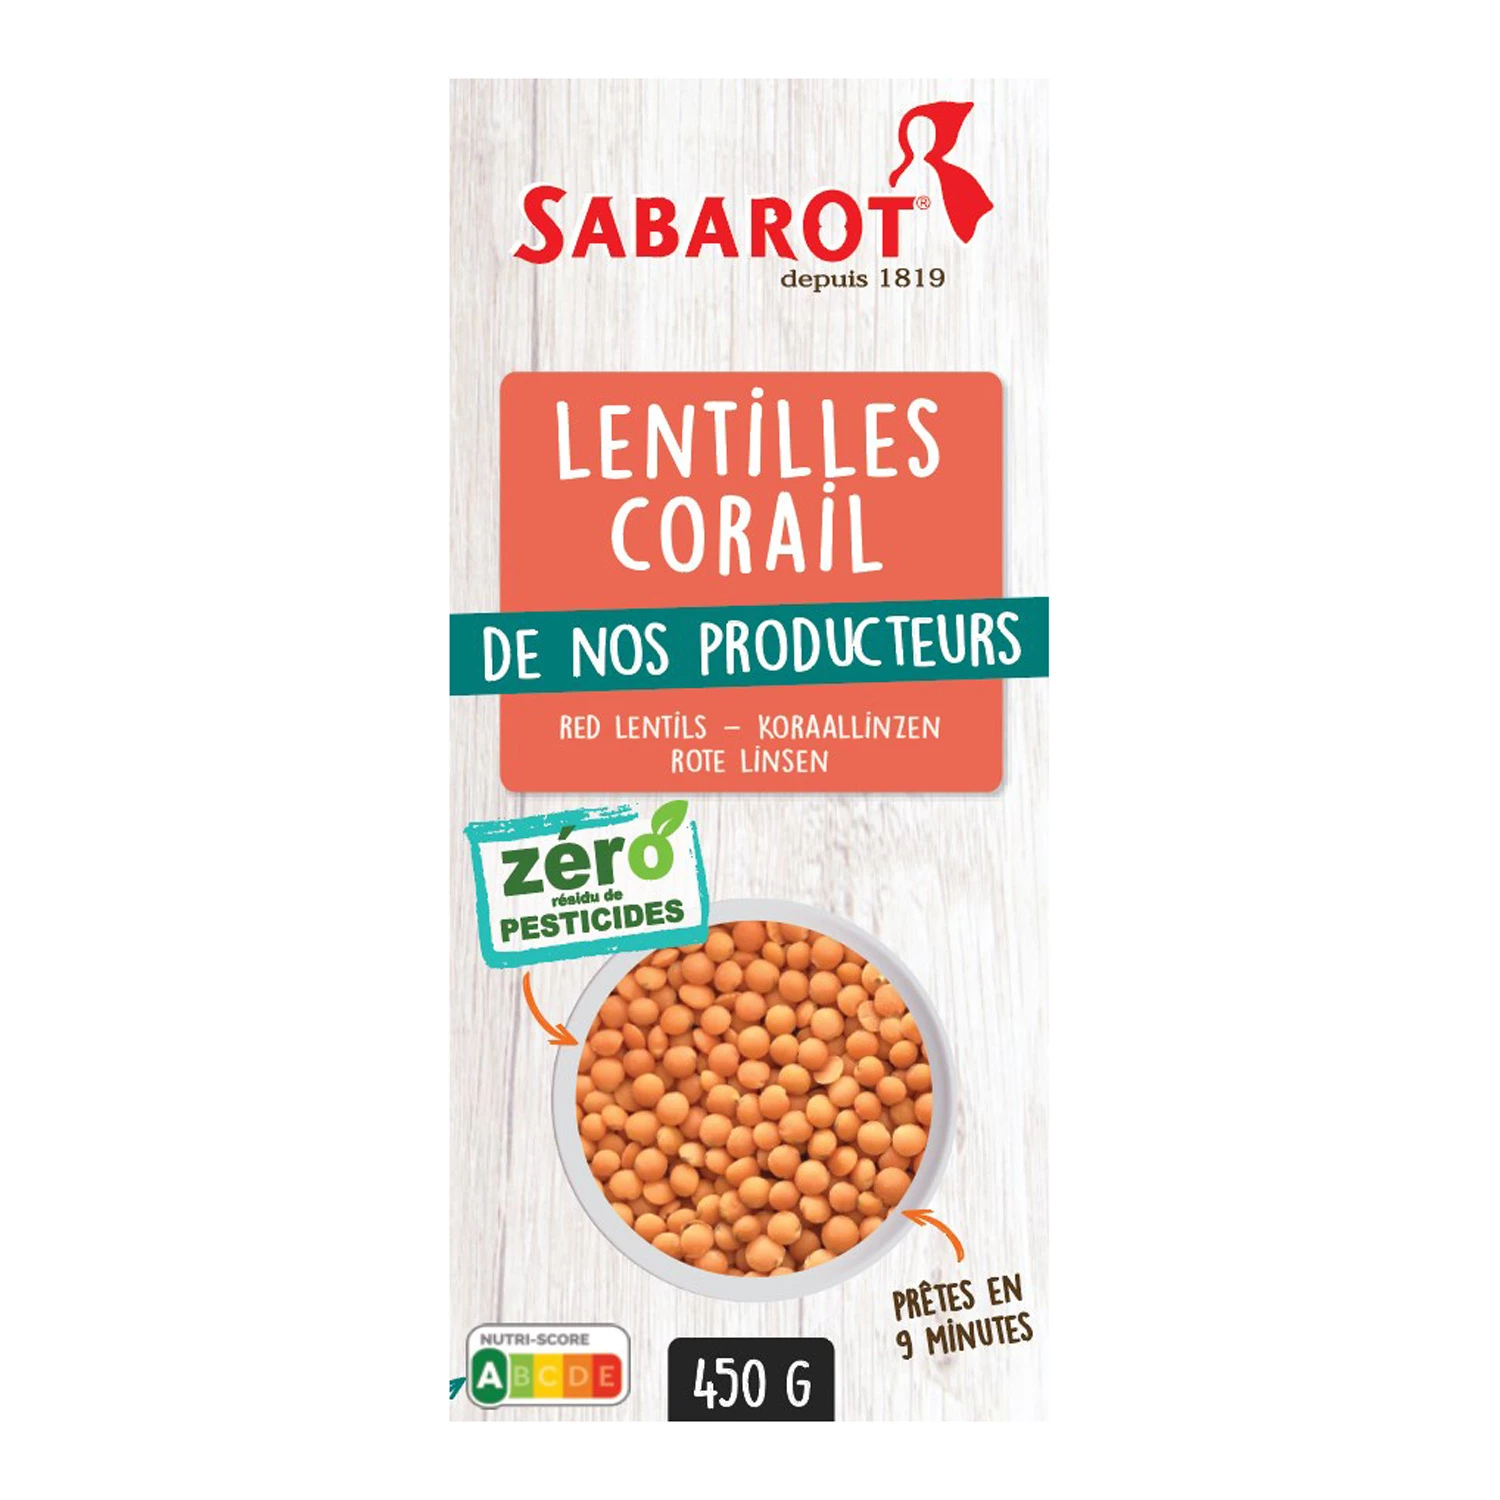 Coral lentils, 450g - SABAROT